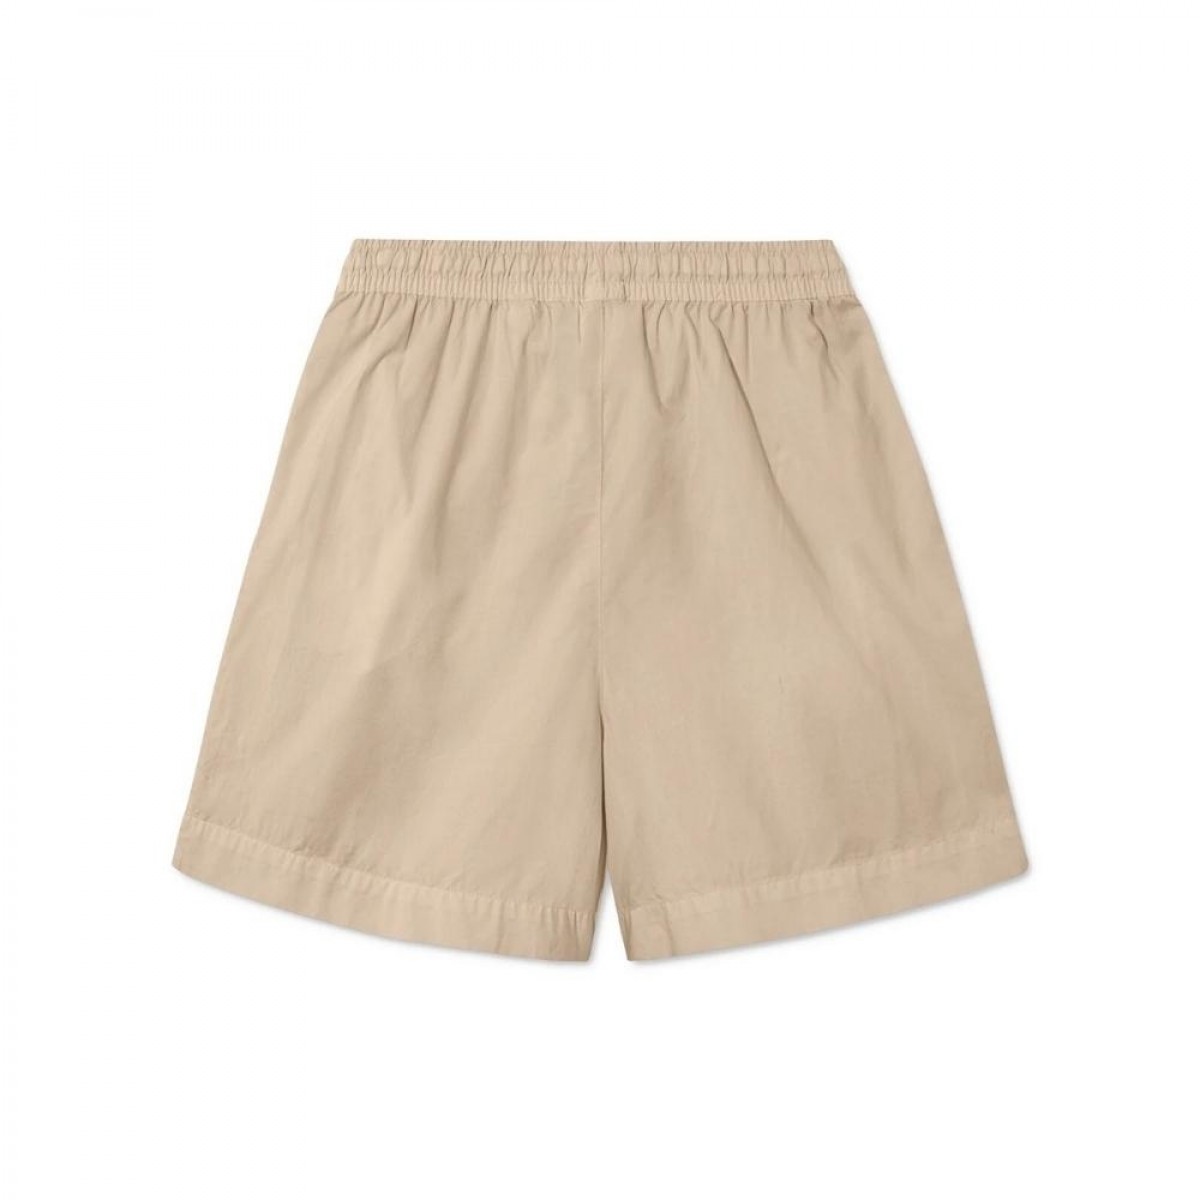 petri gmth shorts - beige - bag